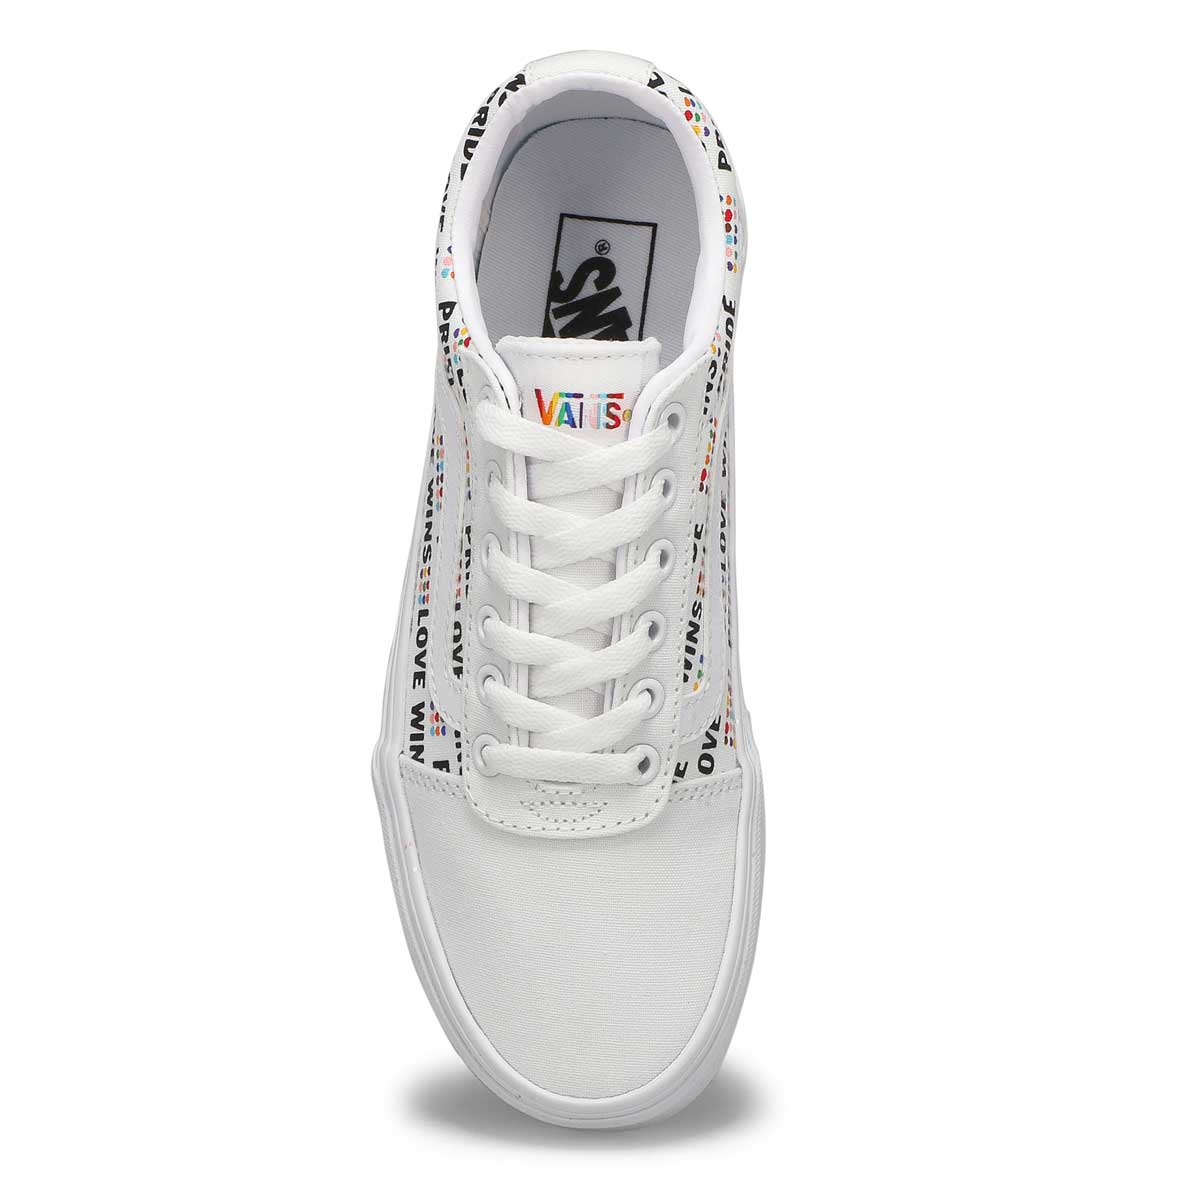 Women's Ward Pride Sneaker - White/White